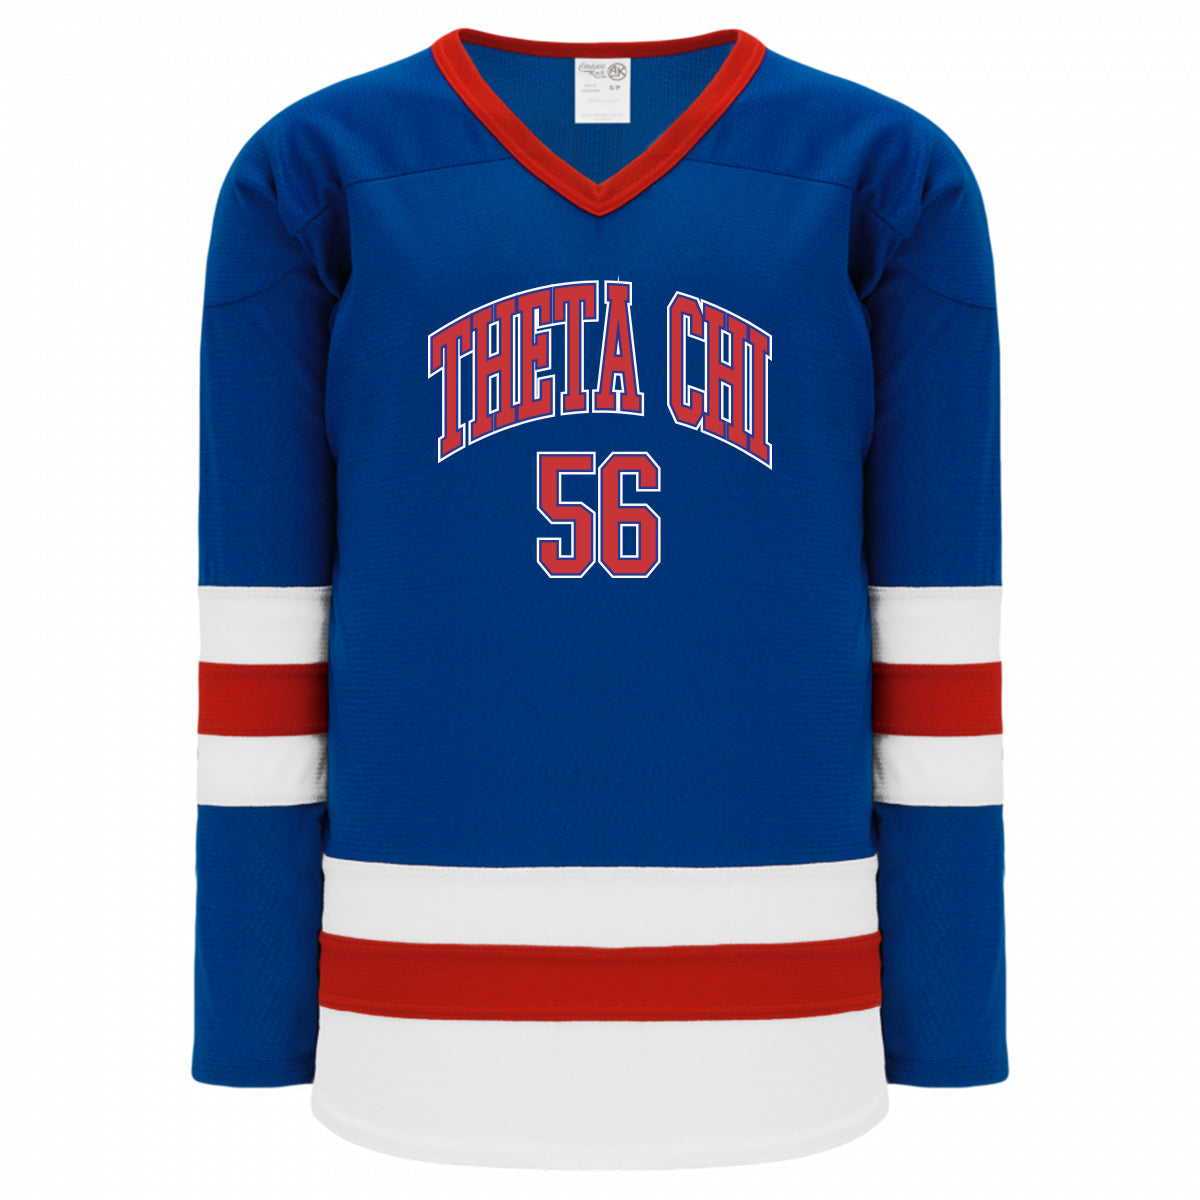 Buy Custom V-Neck Hockey Jerseys Online, Design Your Own